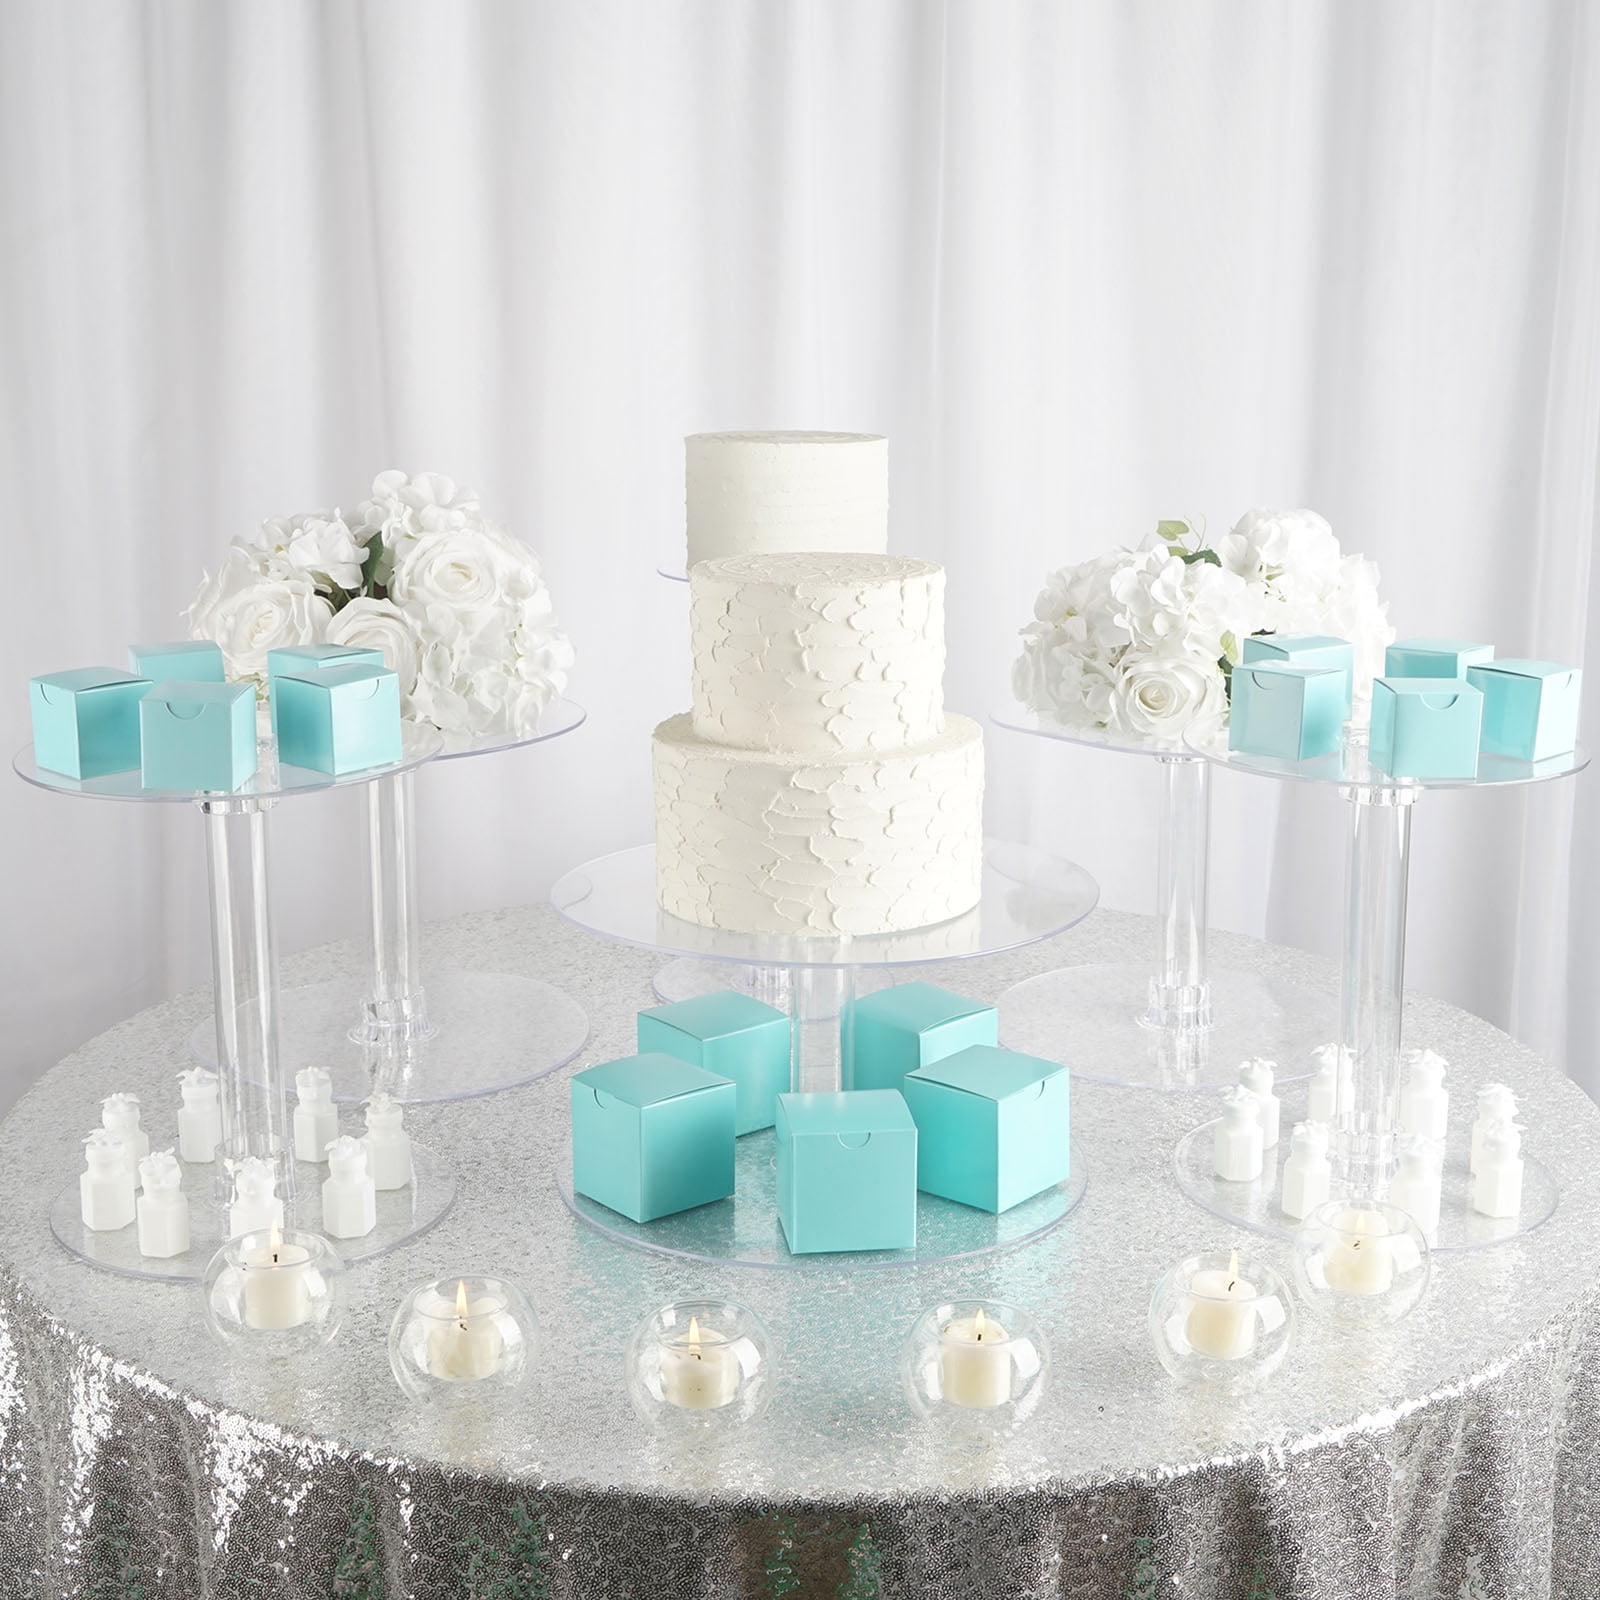 4 Tier White Cake Cupcake Stand Wedding Birthday Party Dessert Display Holder US 